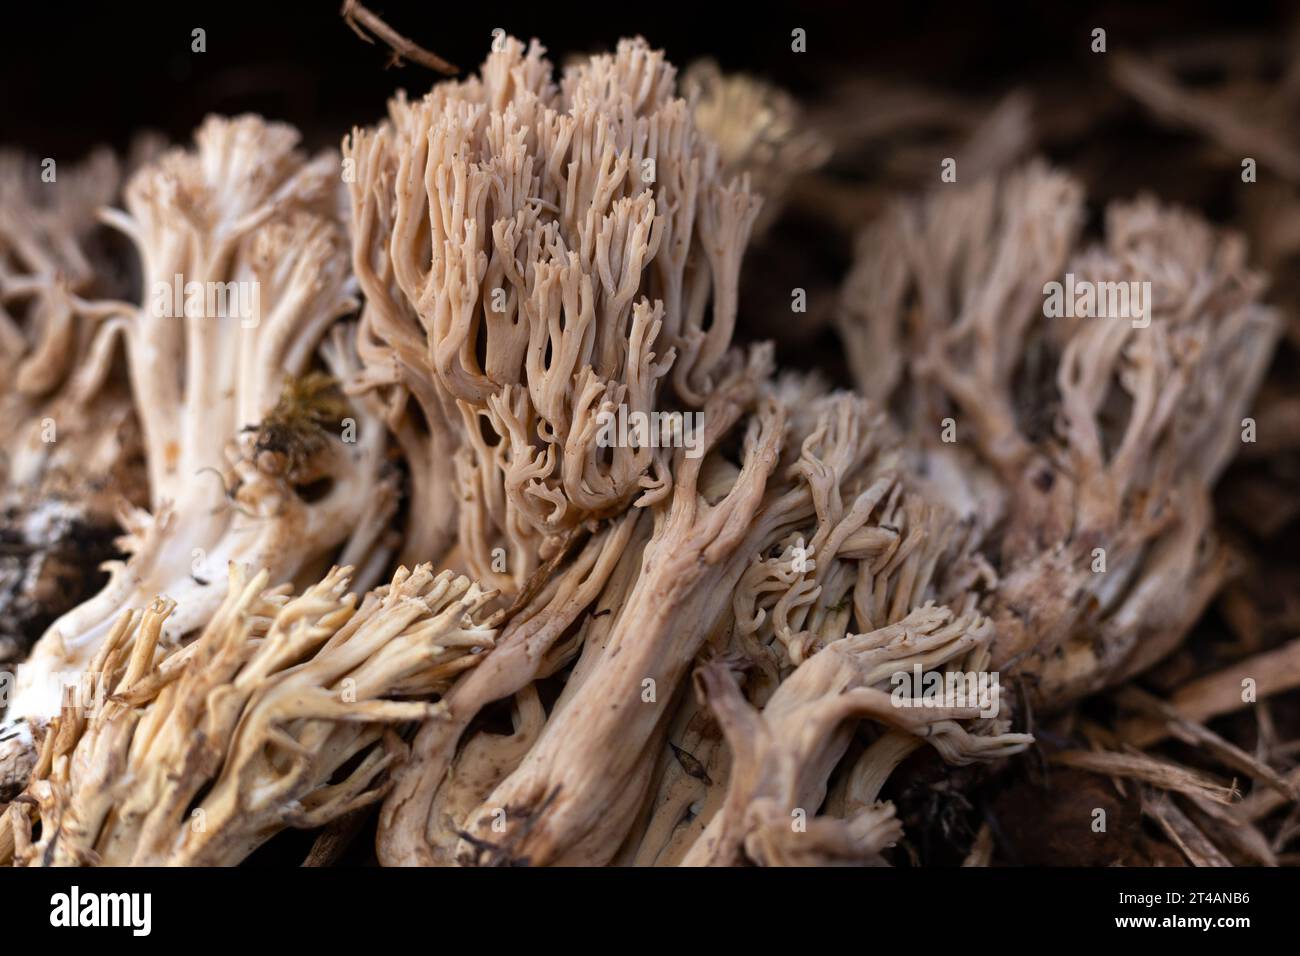 Ramaria acrisiccescens mushrooms. Stock Photo